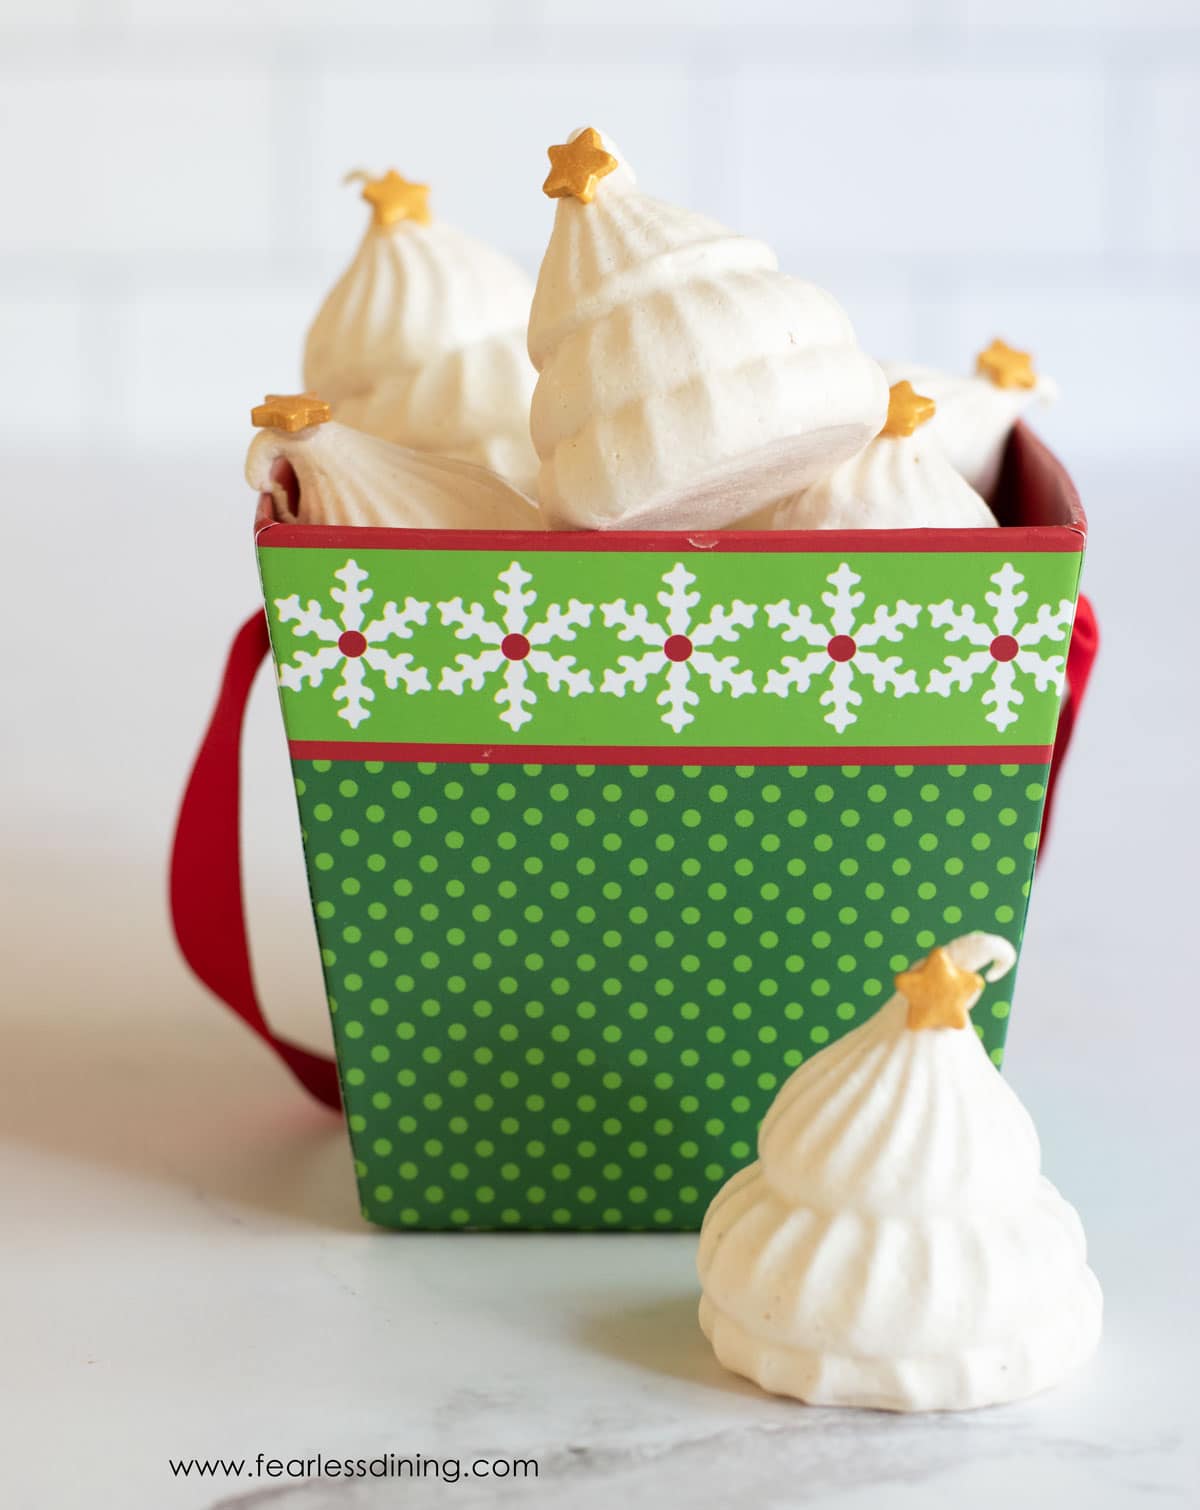 A gift box of meringues shaped like Christmas trees.